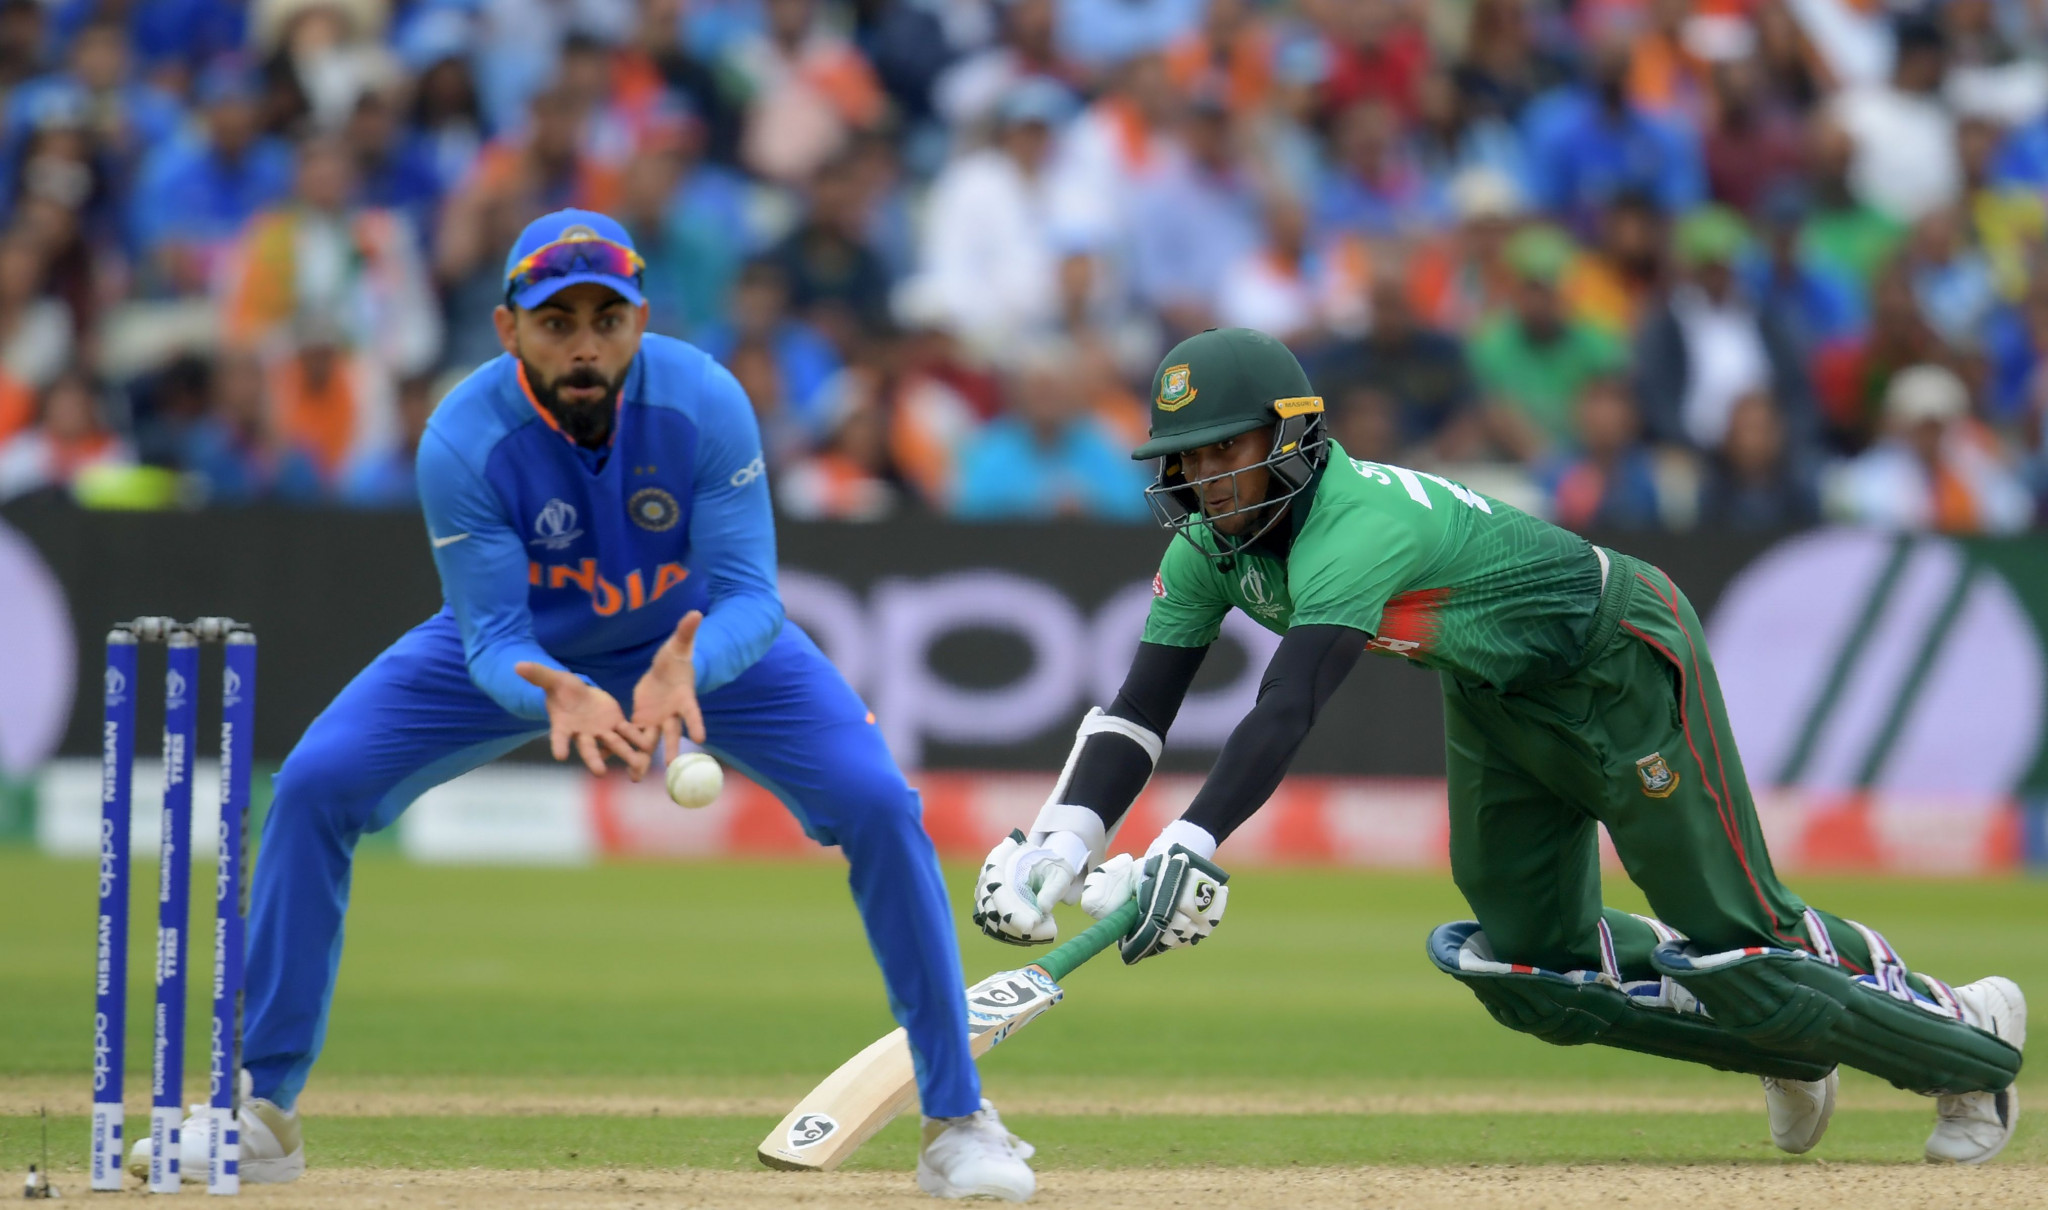 India beat Bangladesh to reach semi-finals at ICC Cricket World Cup